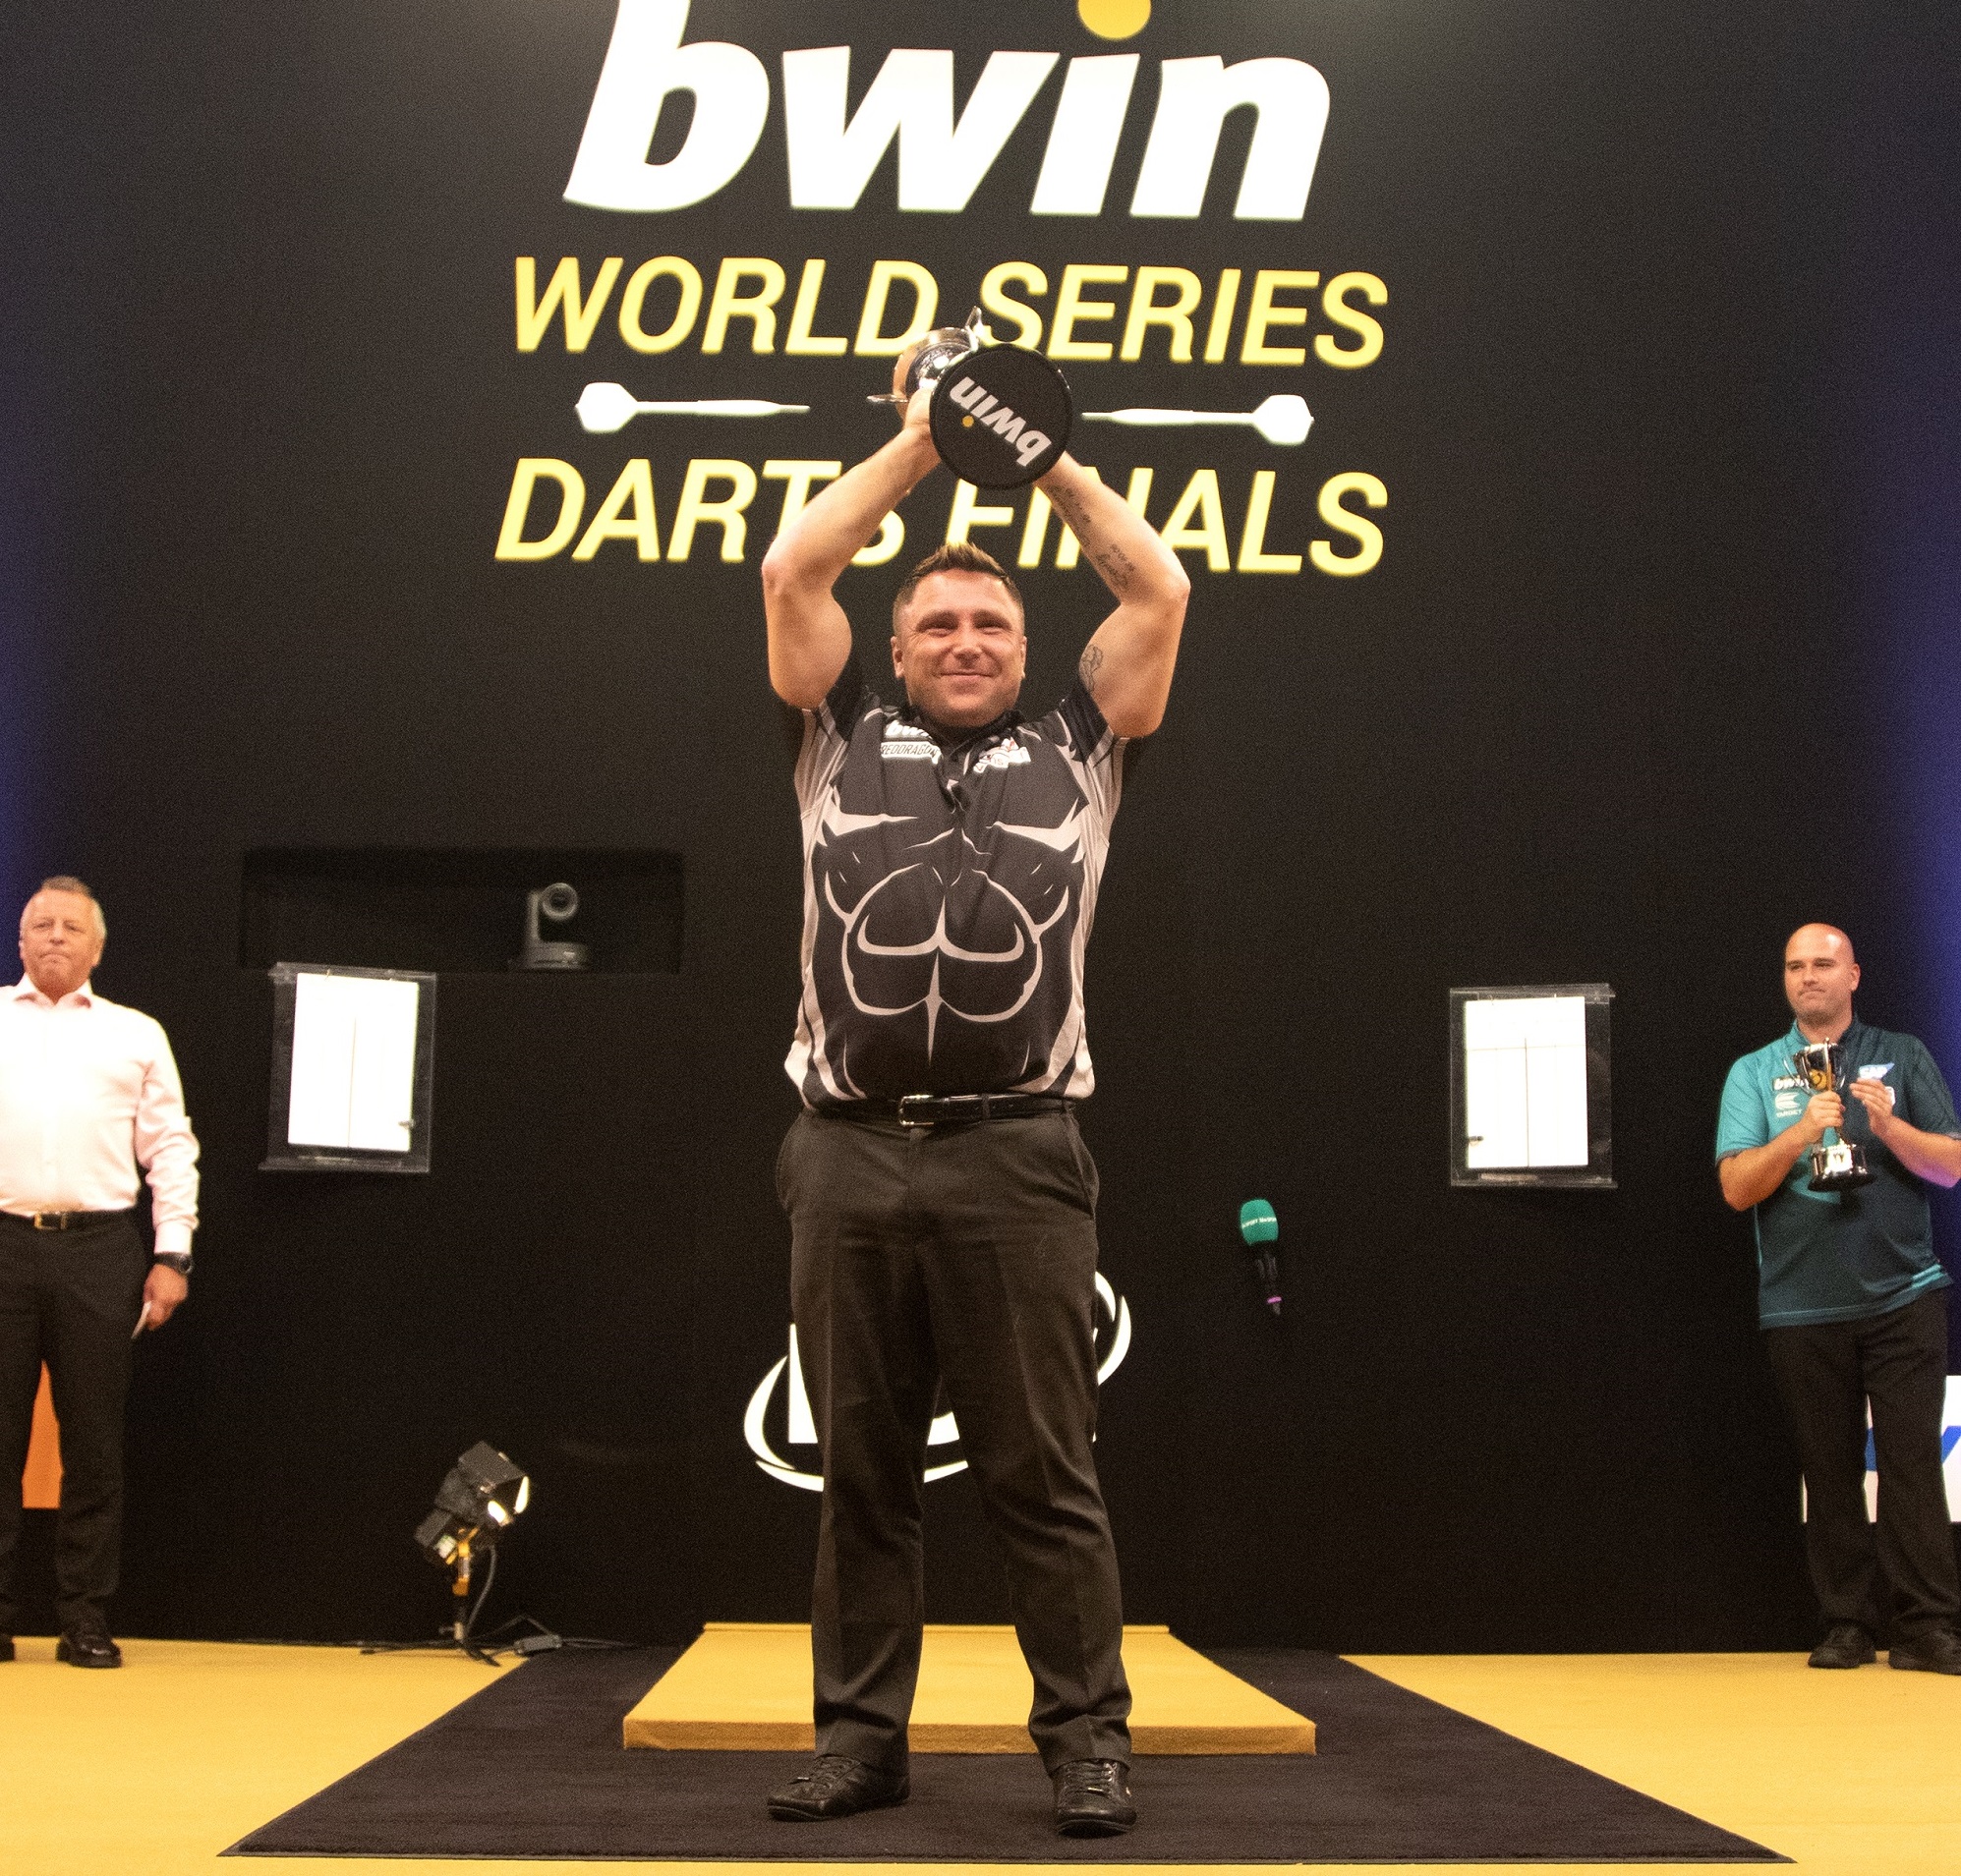 World Series of Darts joy for Gerwyn Price